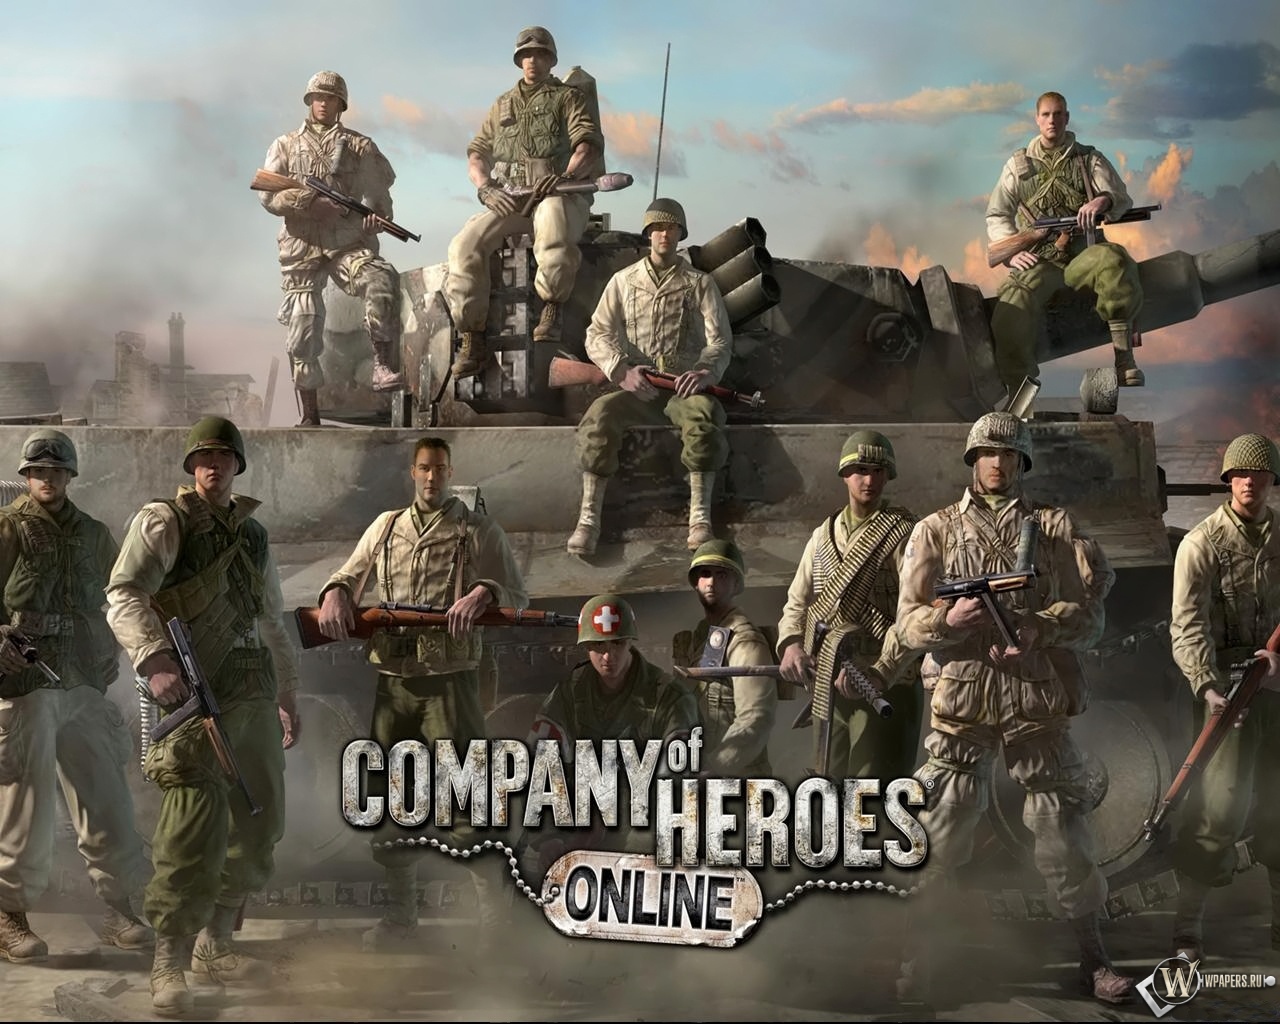 Company of Heroes 1280x1024